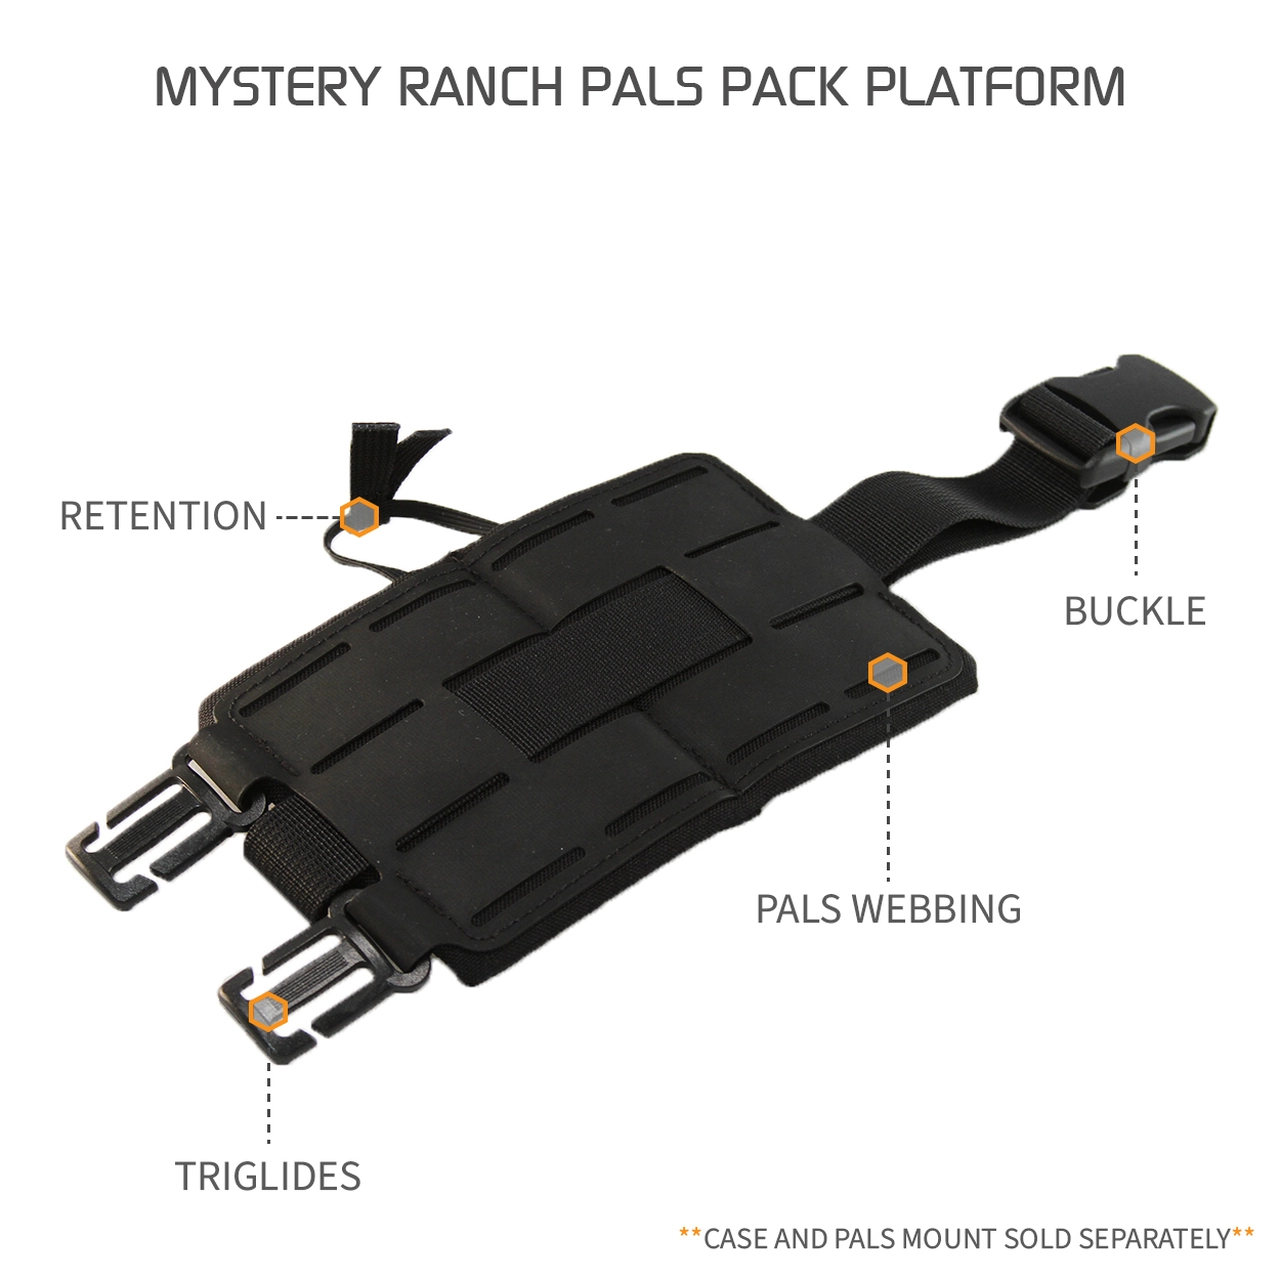 PALS Pack Platform